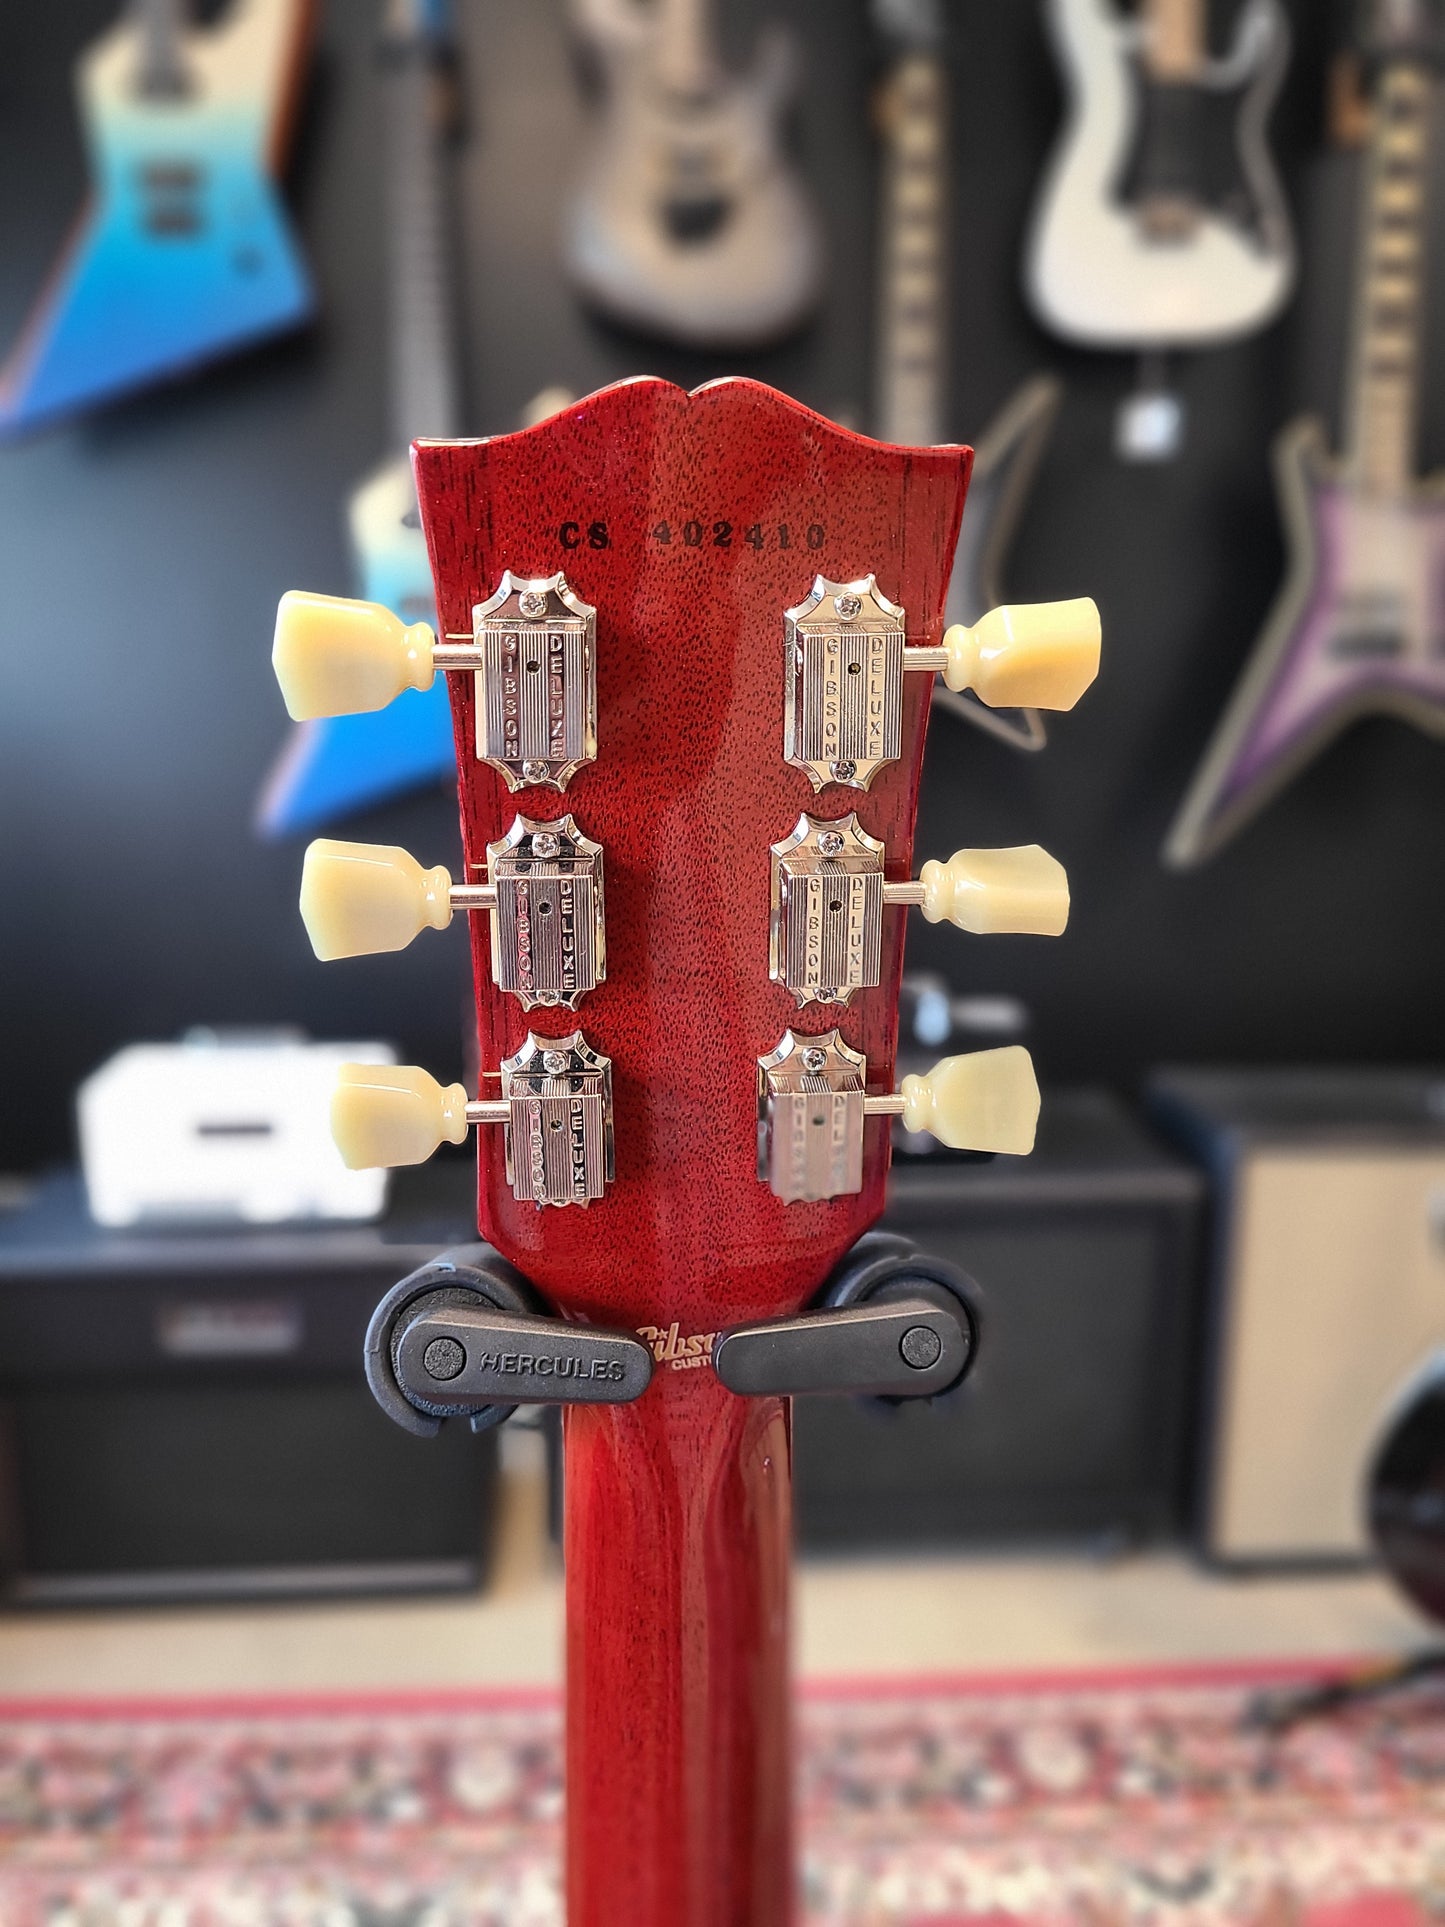 USED 2014 Gibson Les Paul Custom Shop Class 5